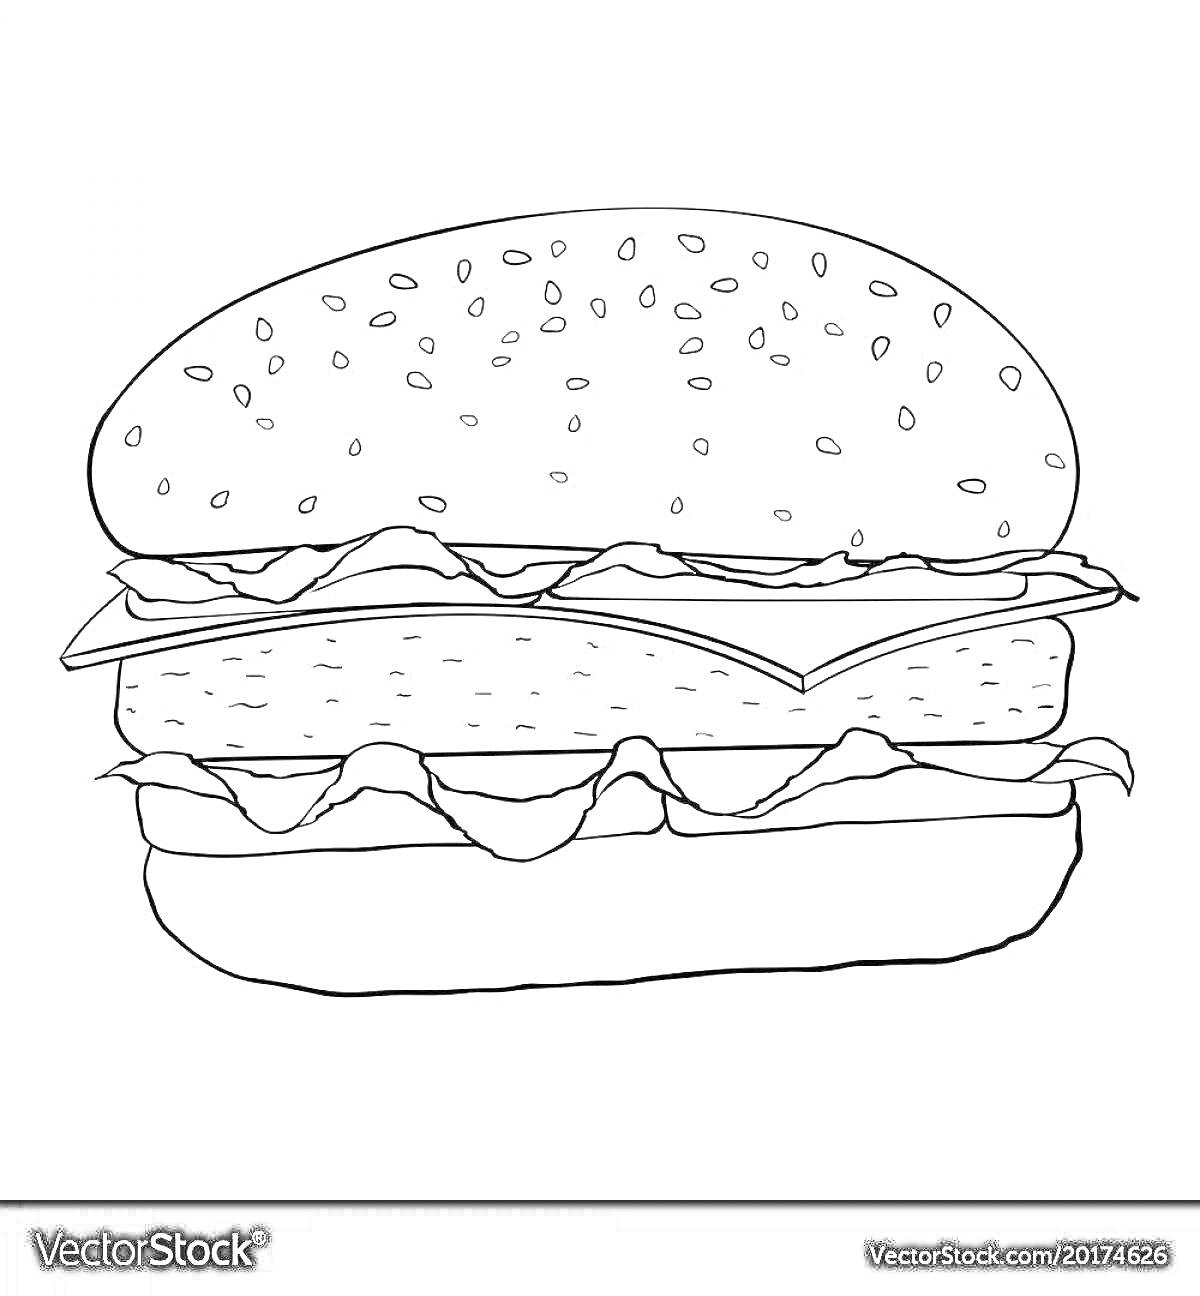 На раскраске изображено: Бутерброд, Колбаса, Сыр, Салат, Еда